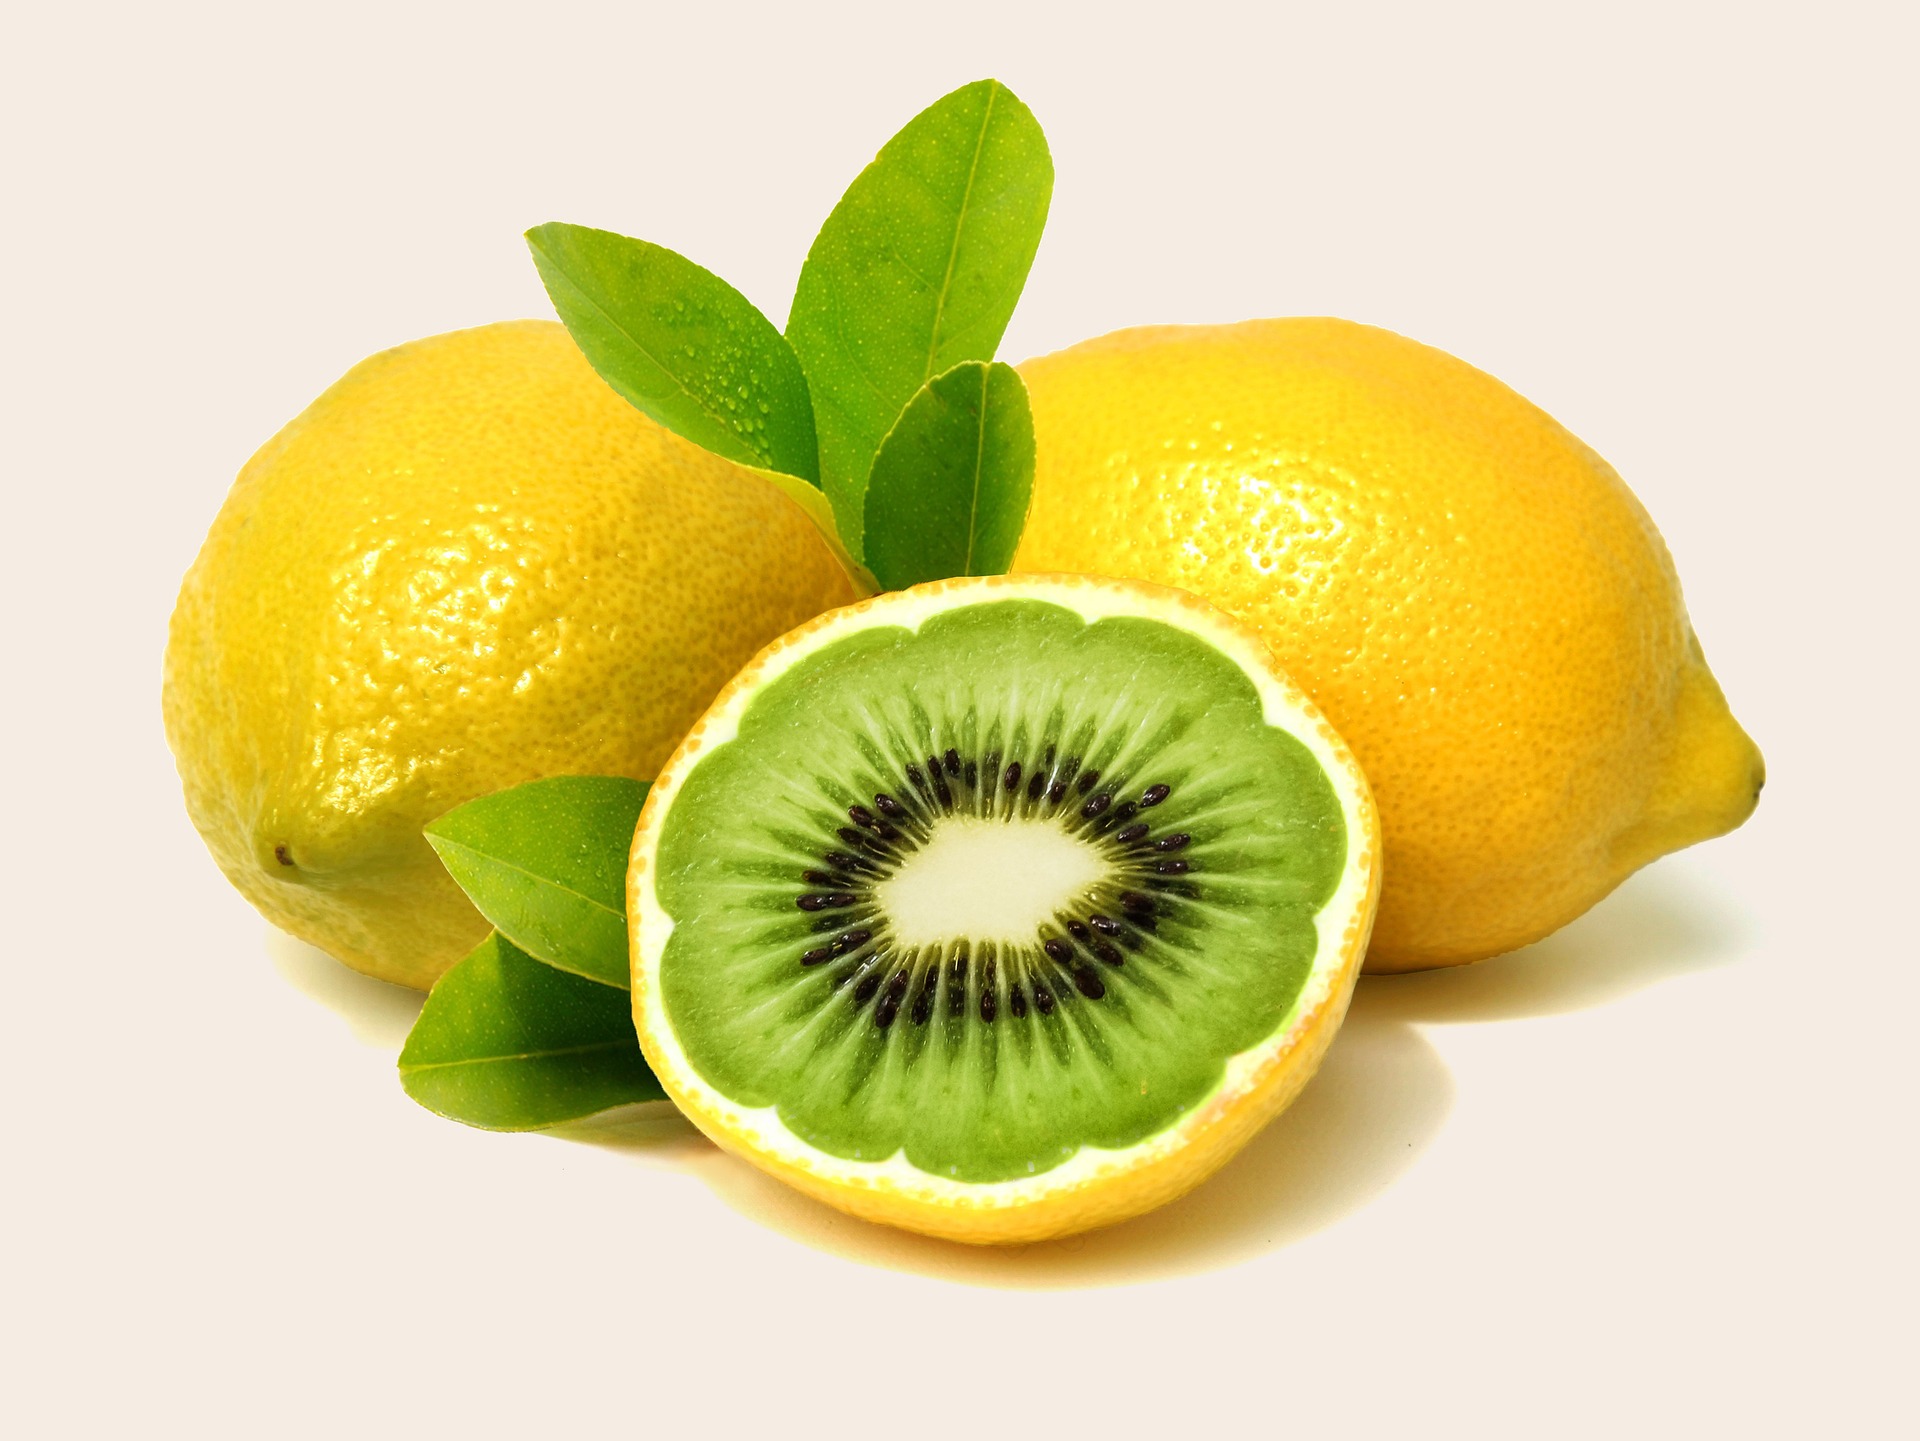 Three lemons, on cut in half revealing a kiwi fruit interior